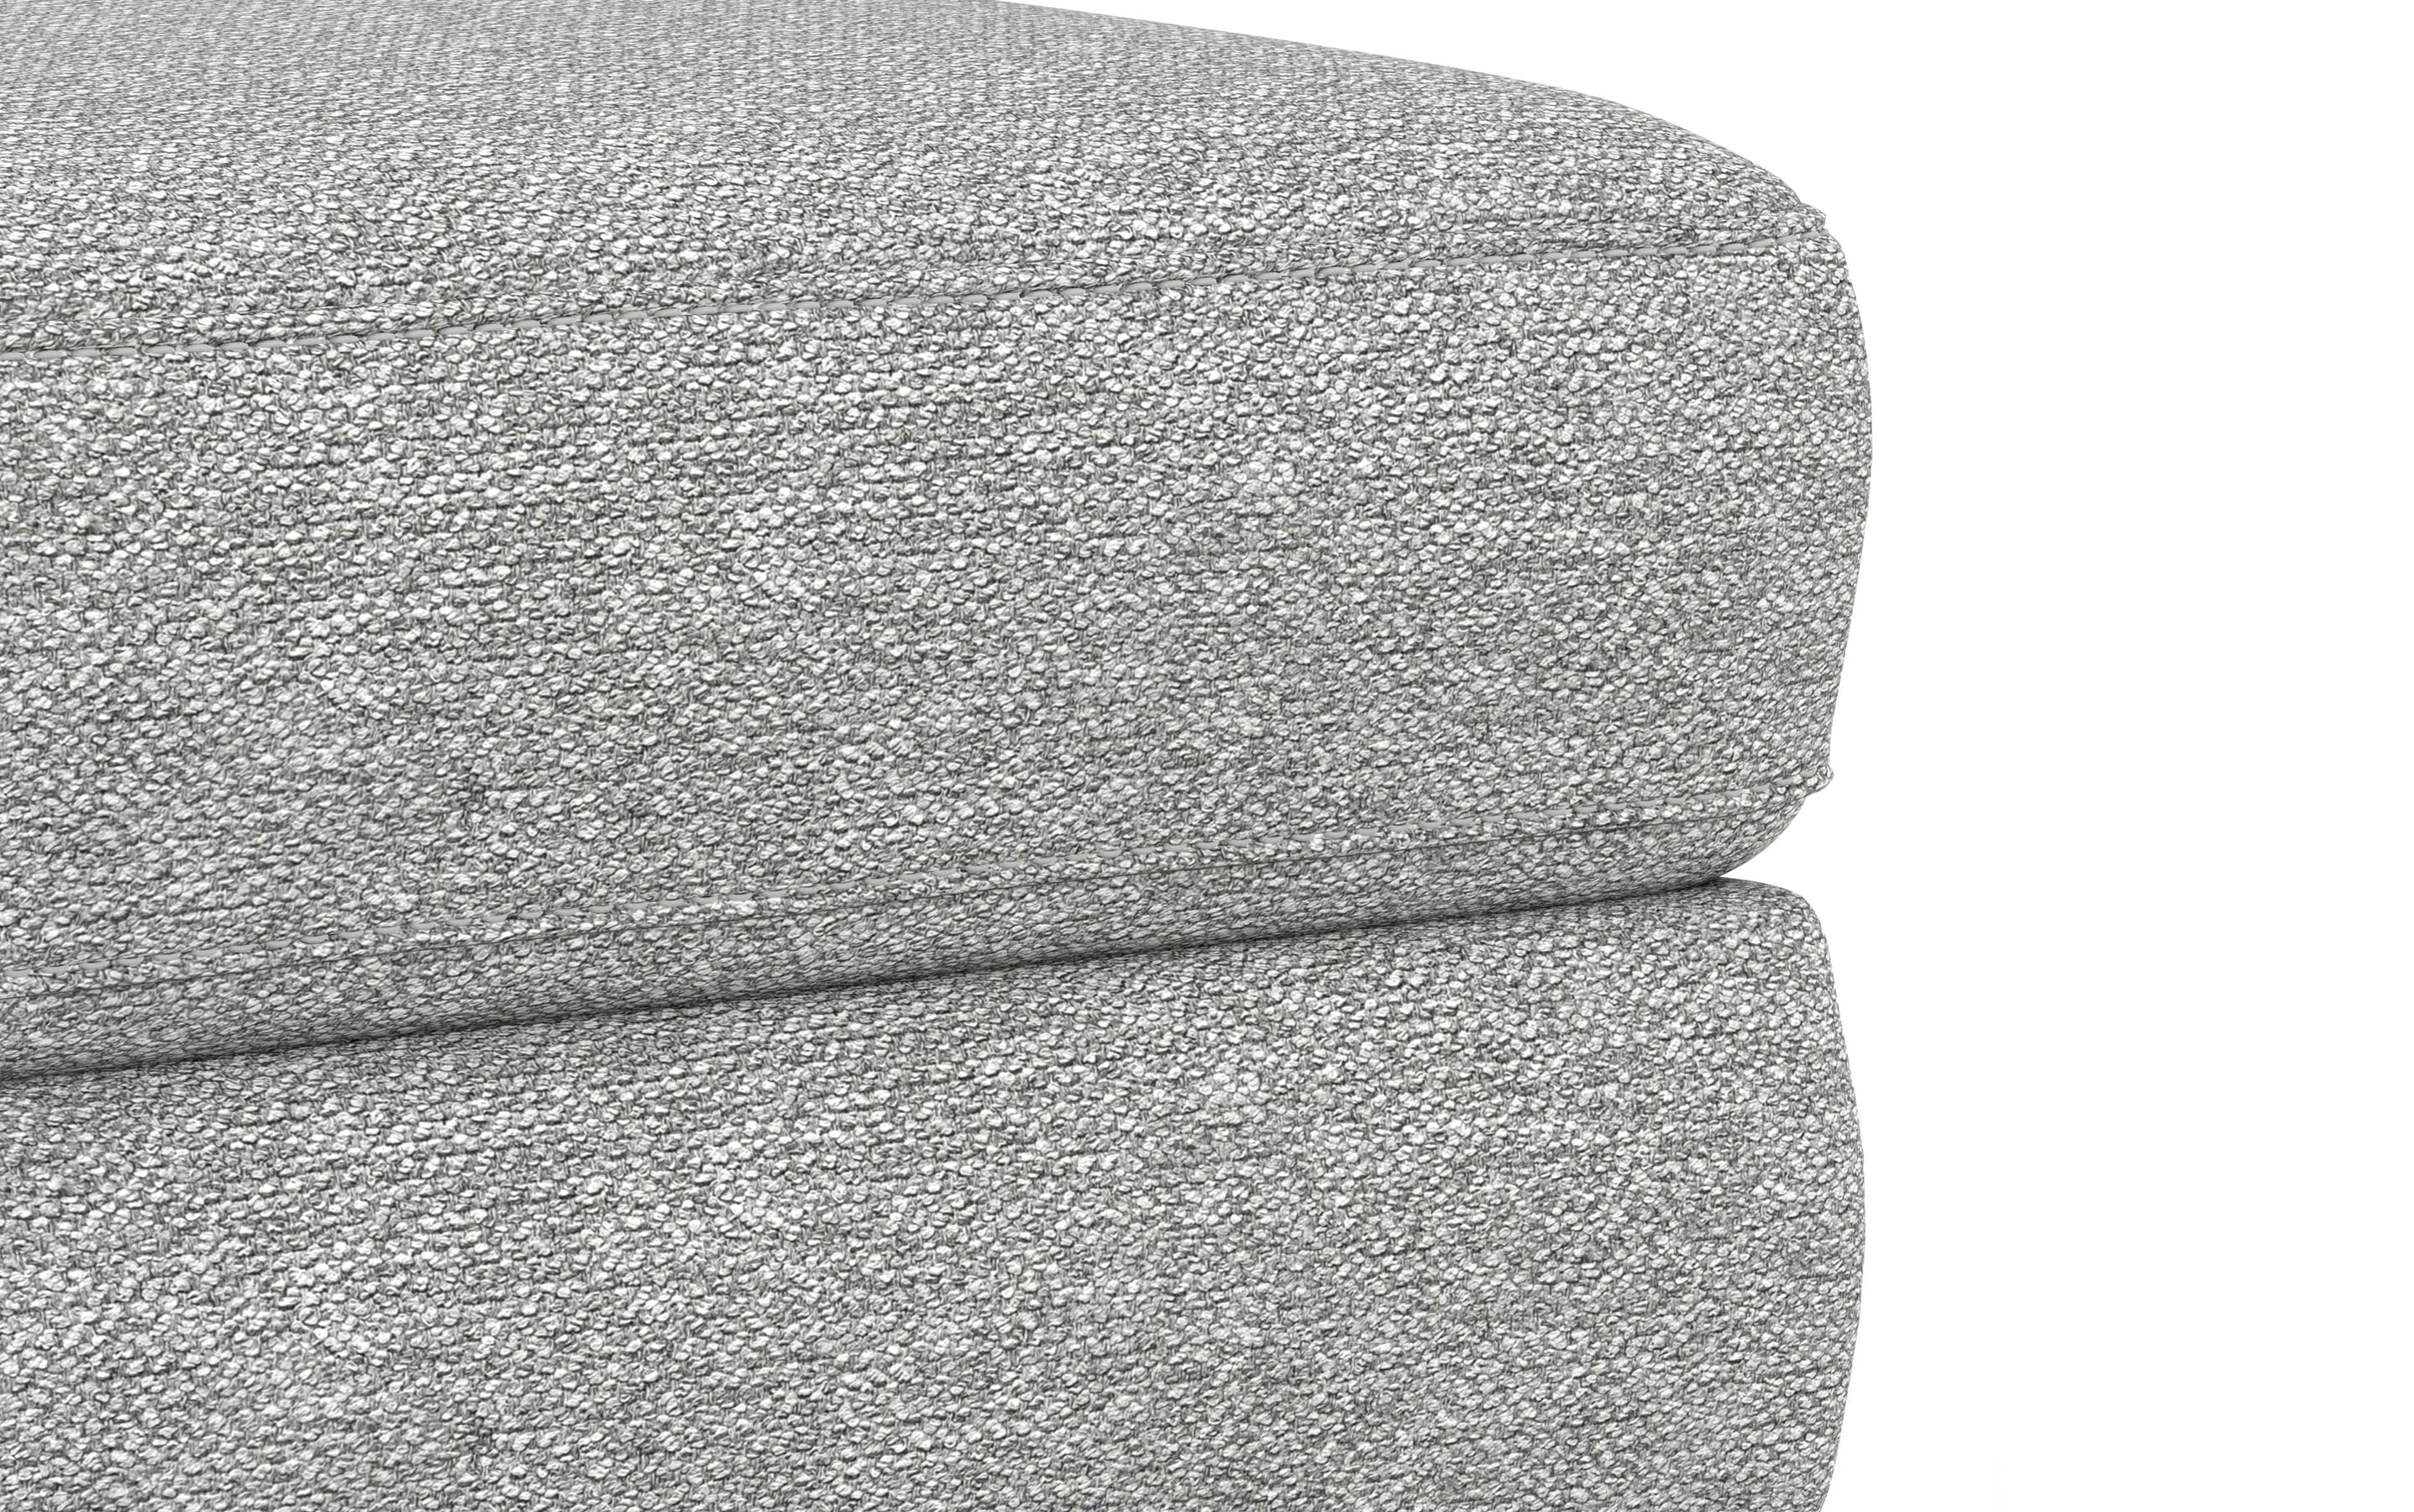 Mist Grey Woven Polyester Fabric | Morrison Ottoman